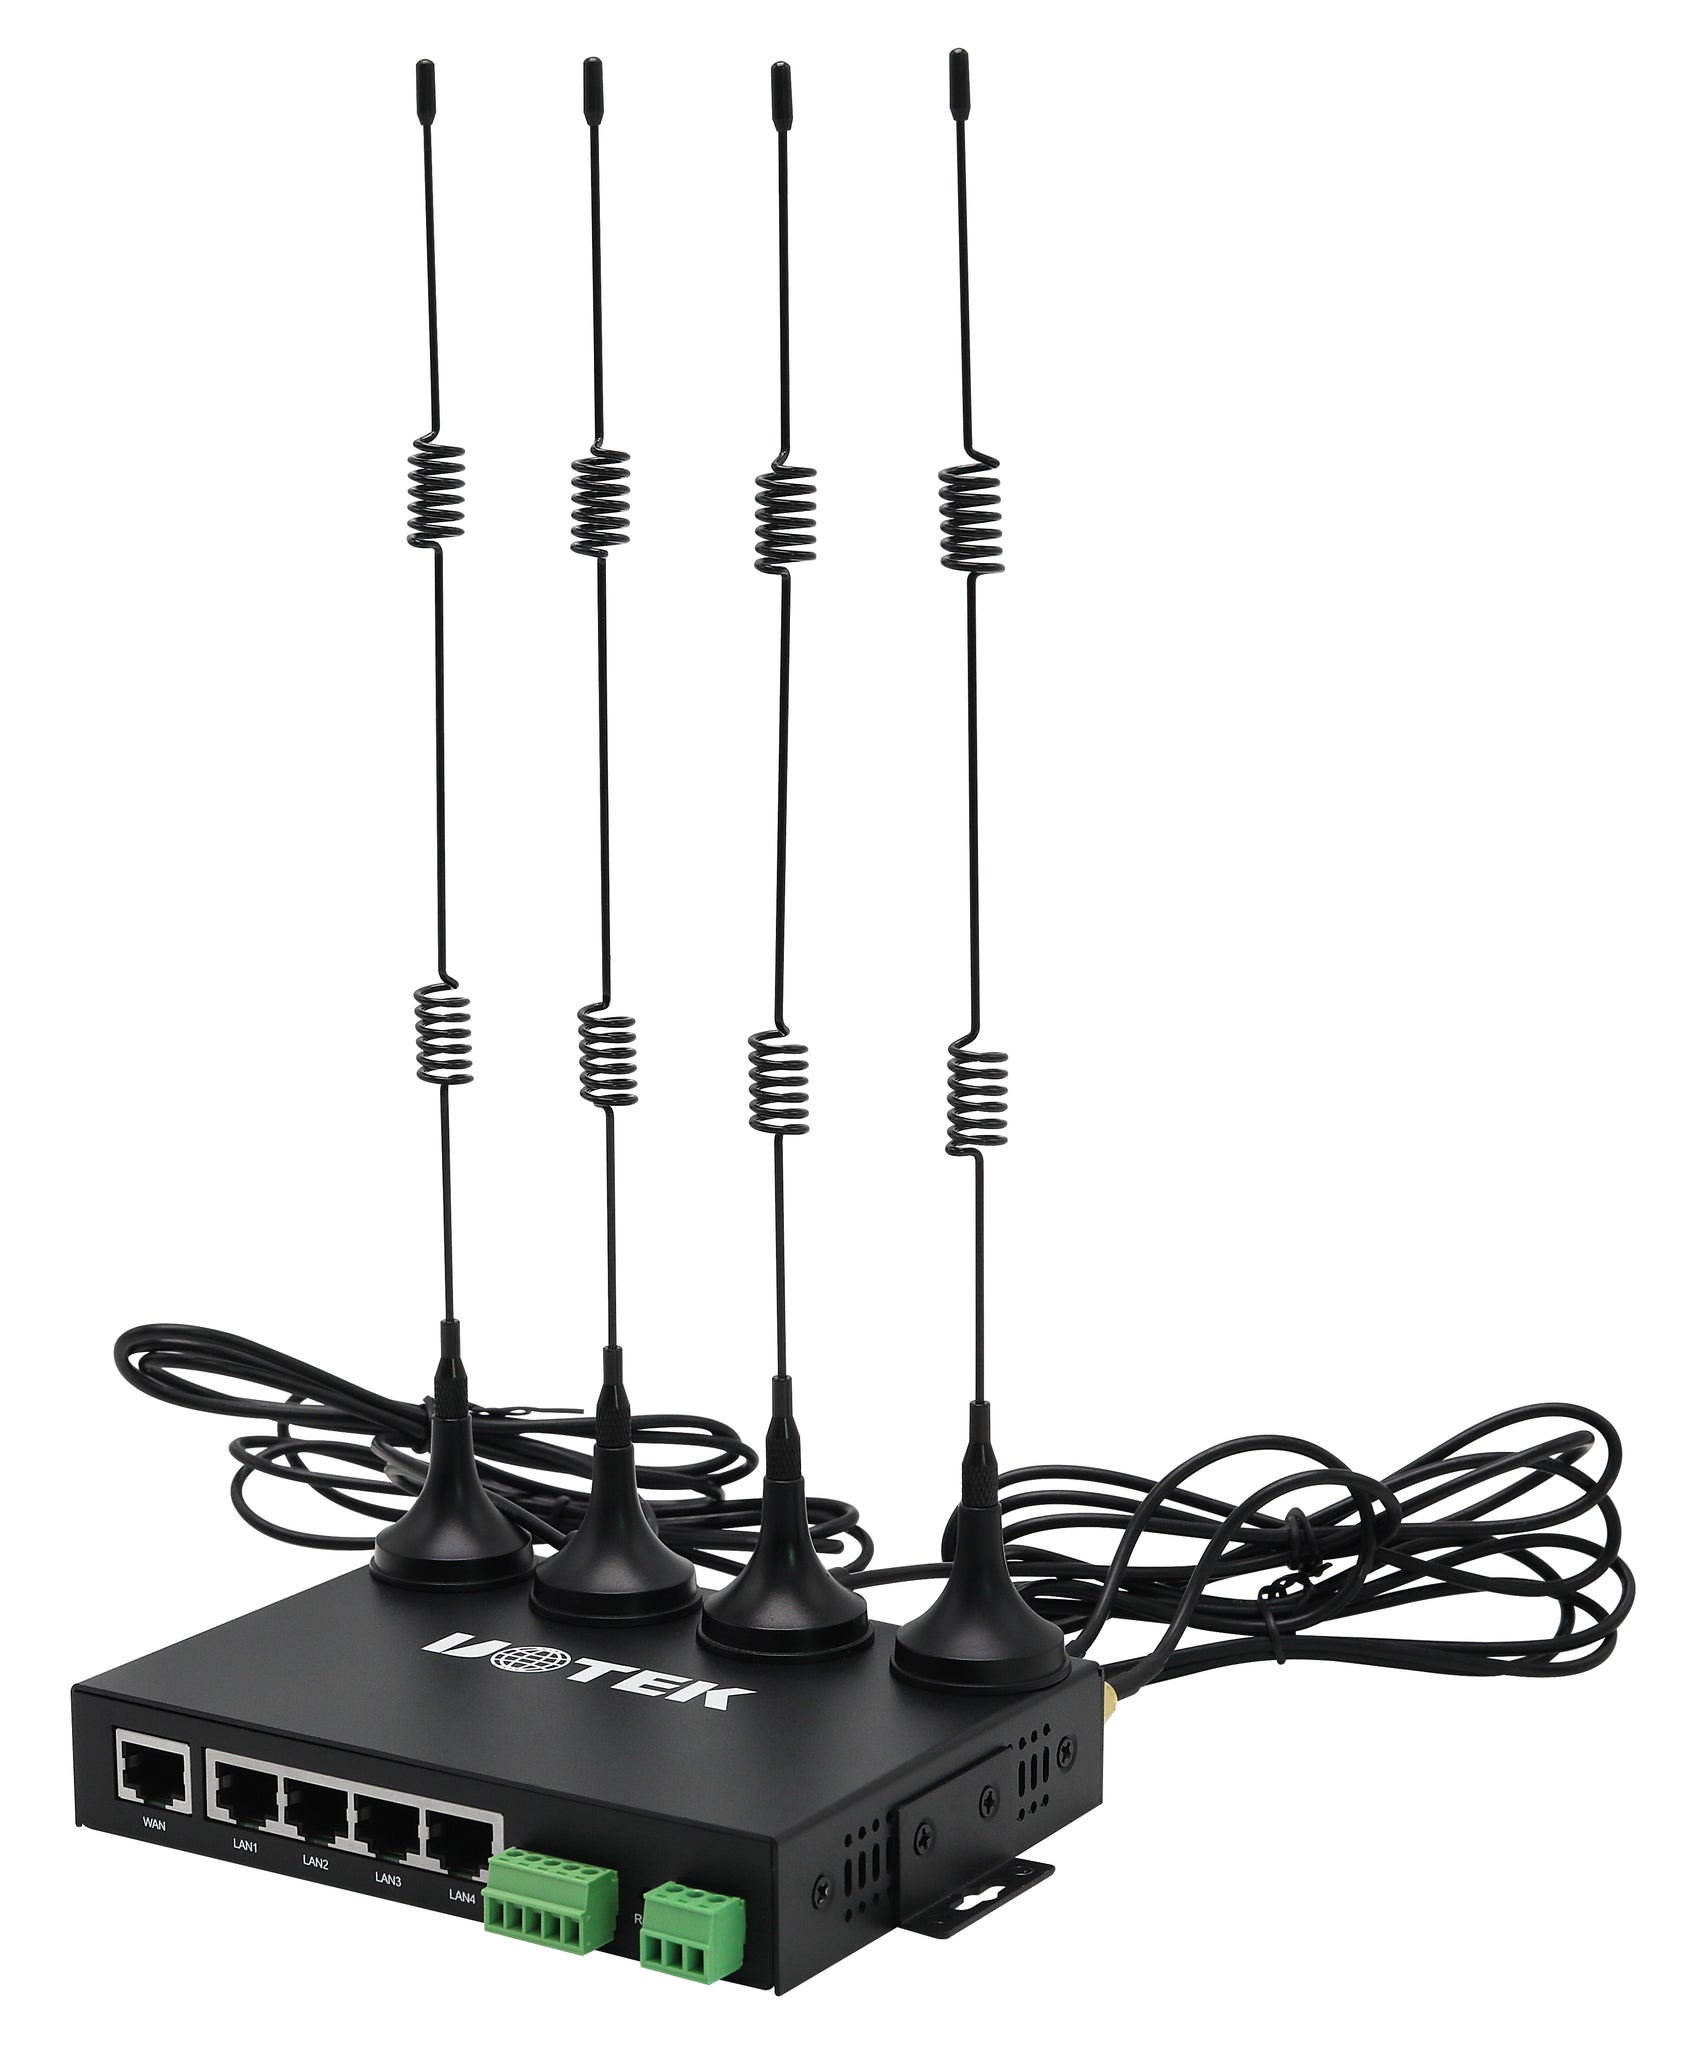 UOTEK R9607 Series 4G Industrial Router